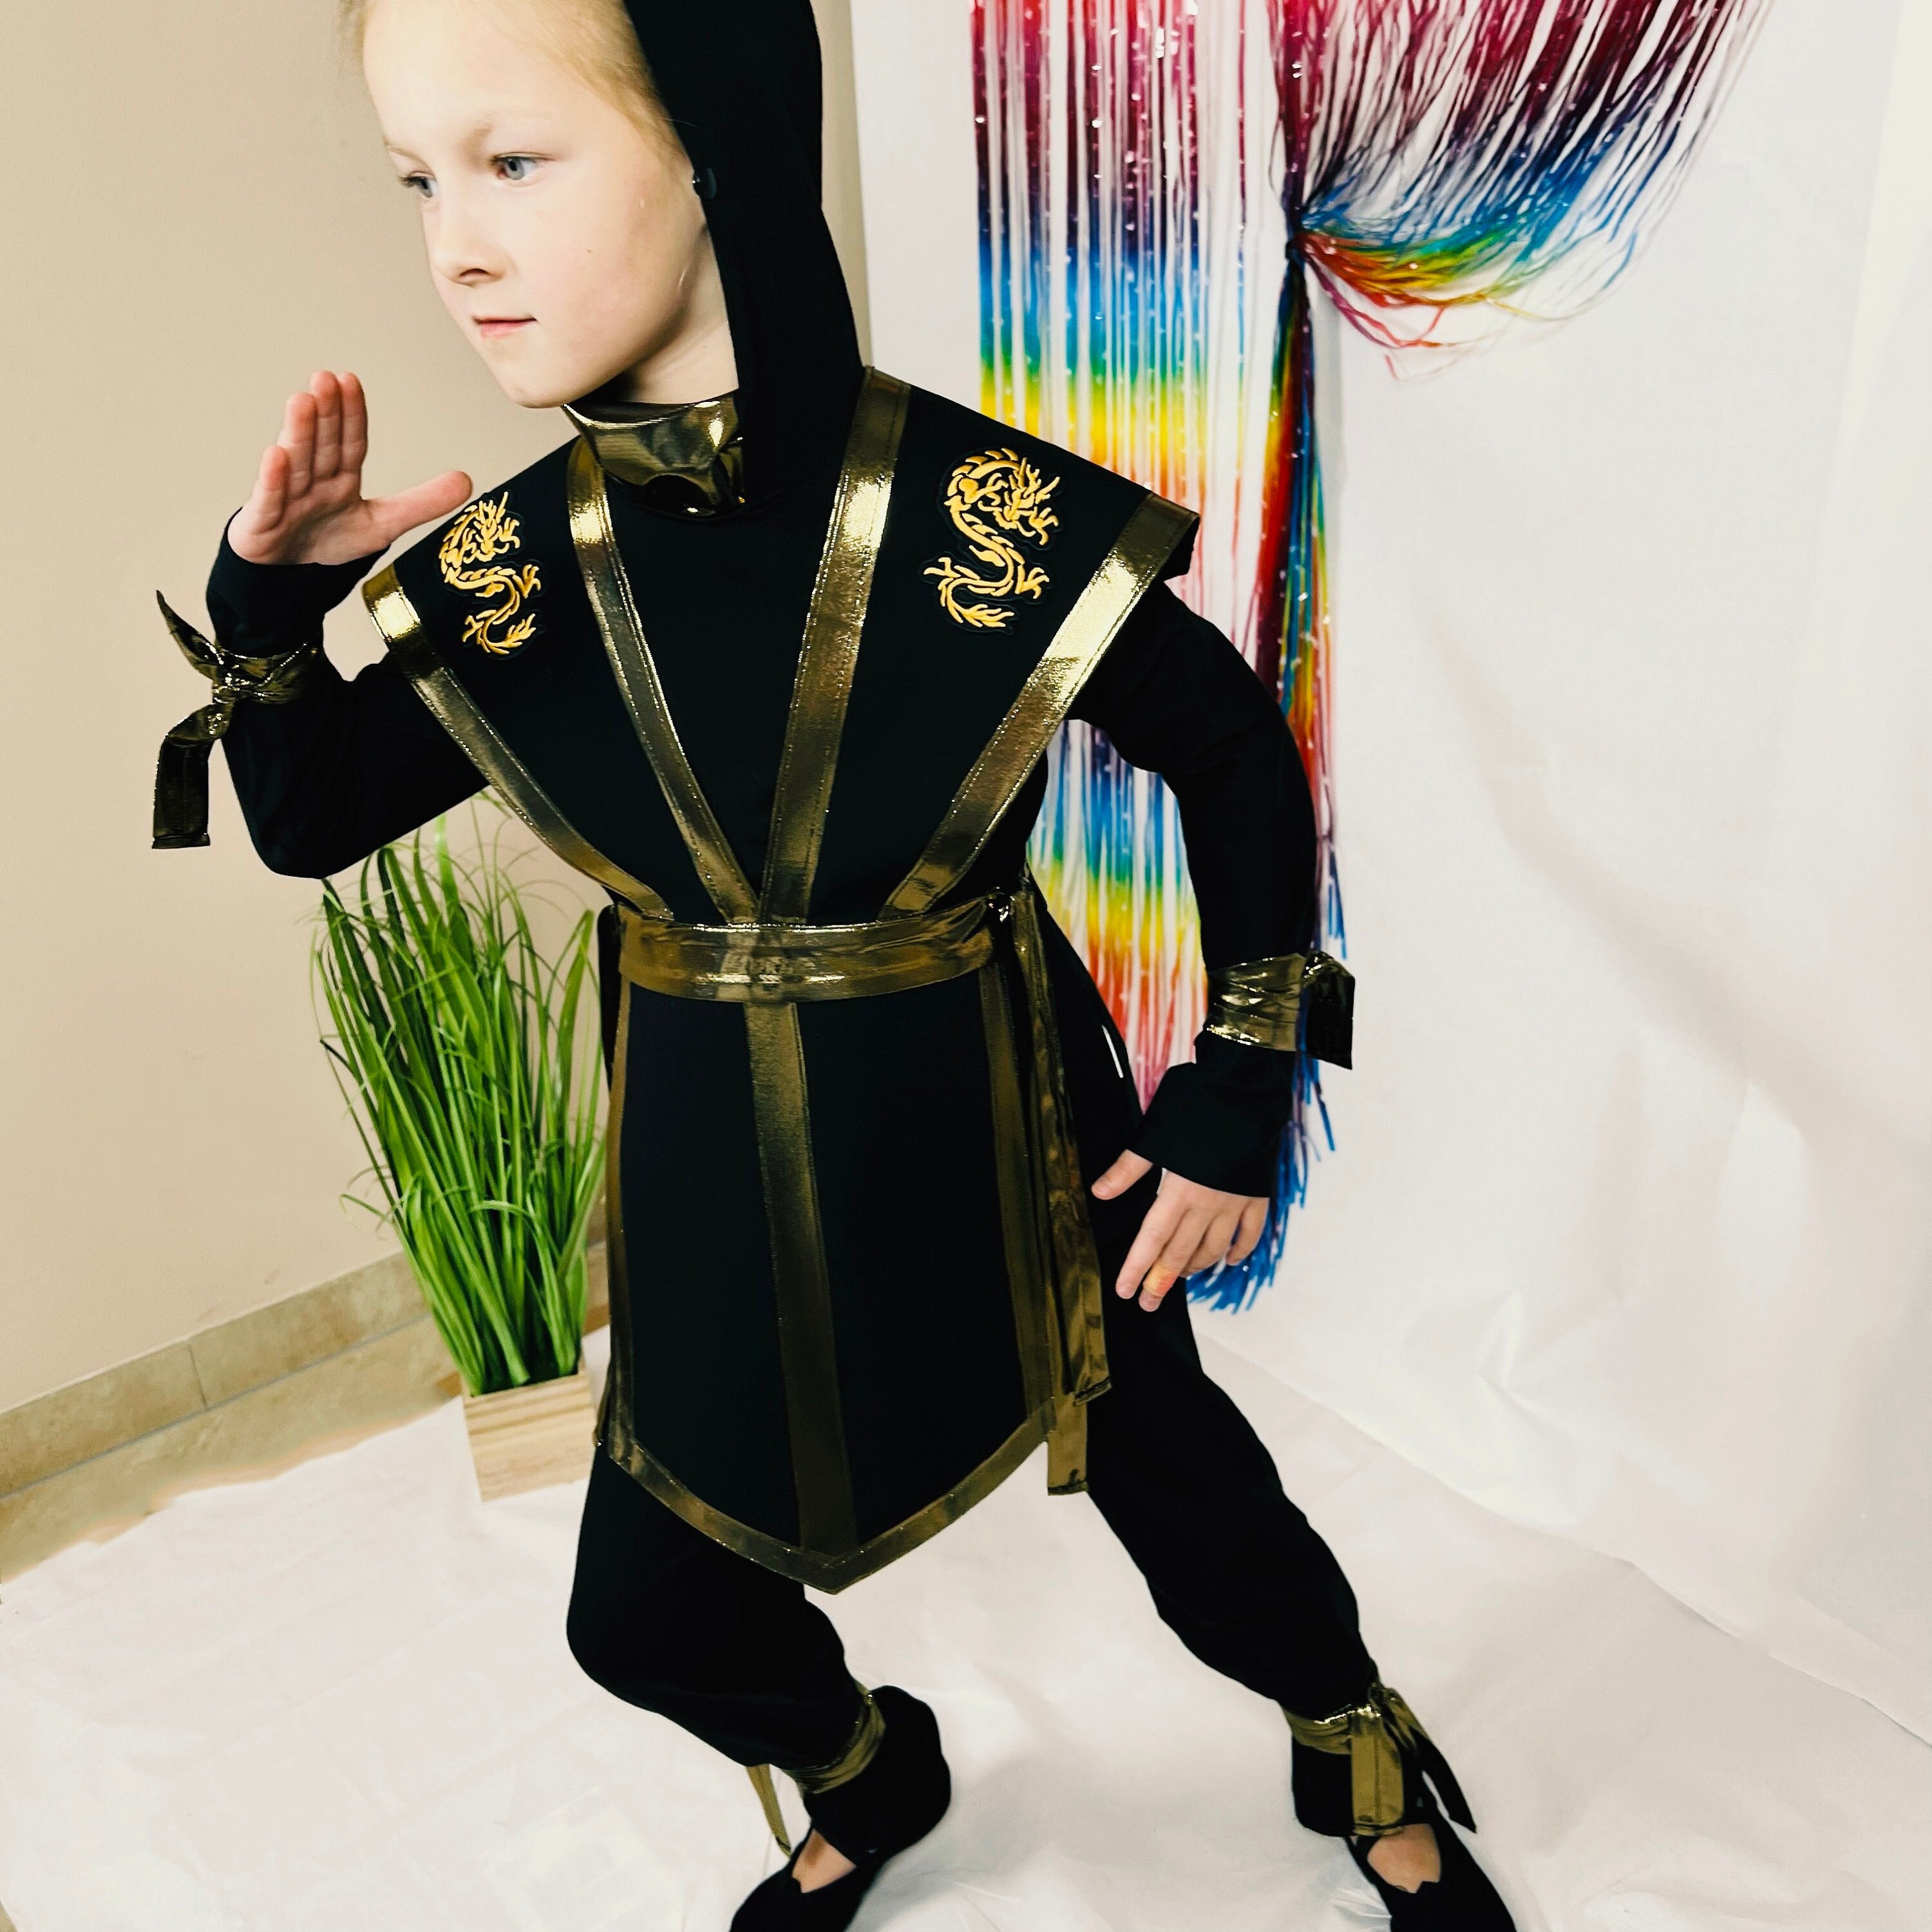 Disfraz infantil - Snake ninja 7-8 años, Carnaval Disfraz Niño